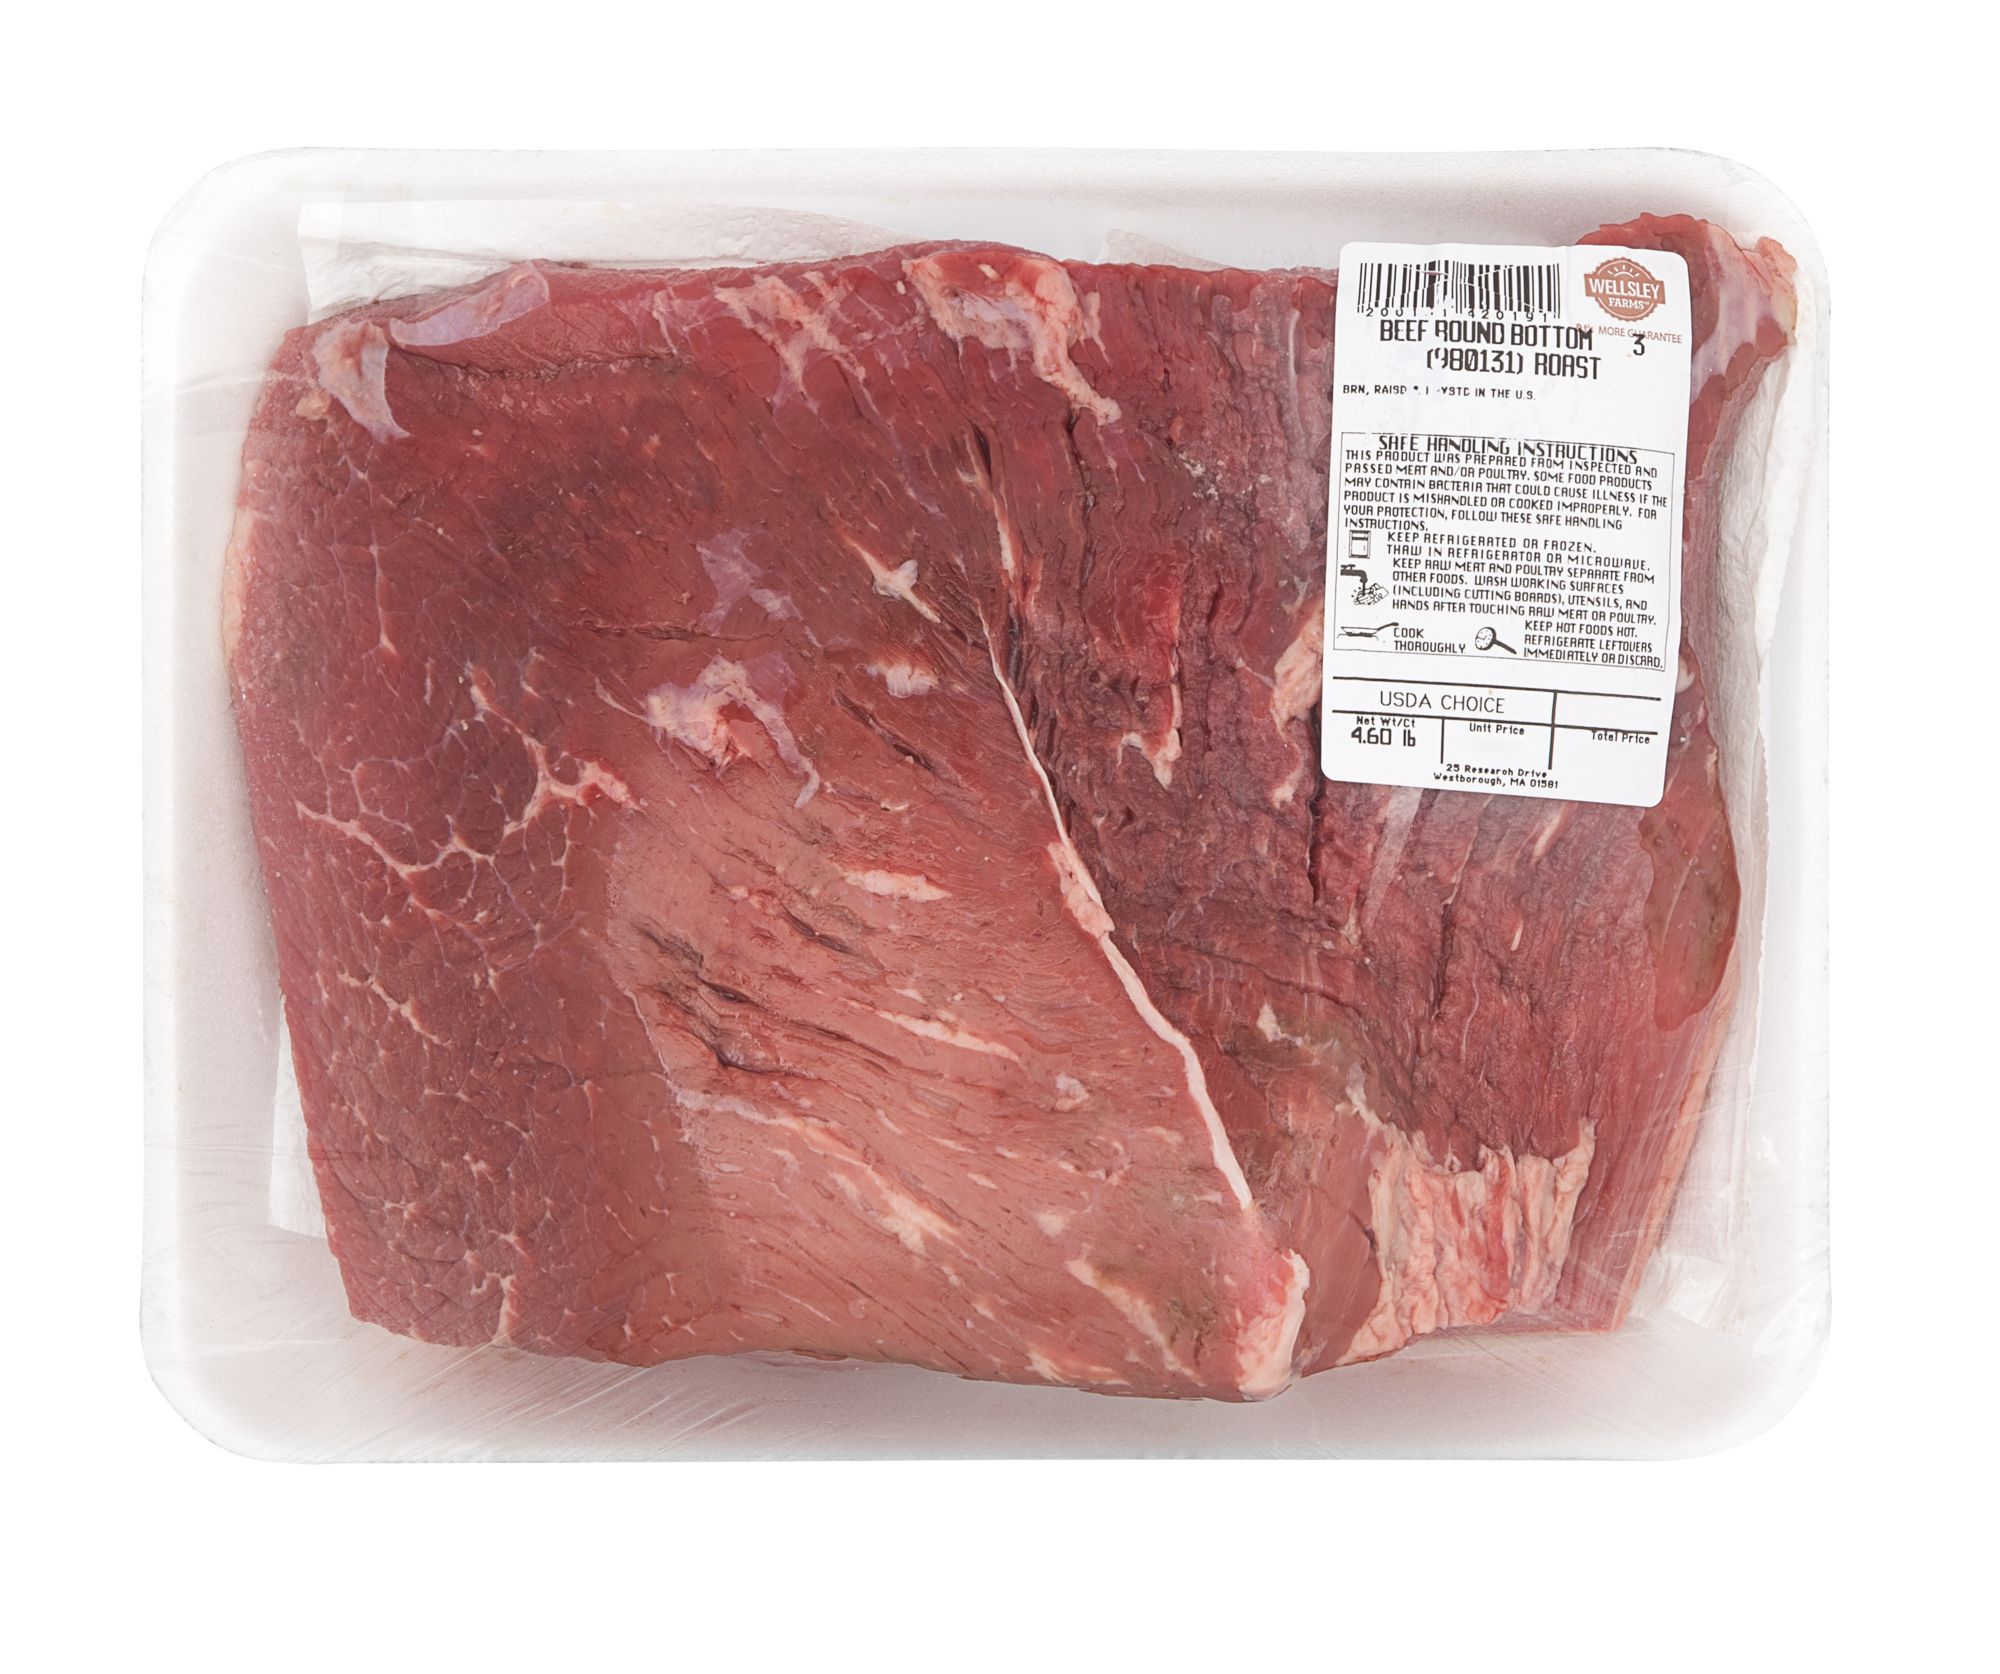 Wellsley Farms USDA Choice Beef Bottom Round Roast,  4-4.5